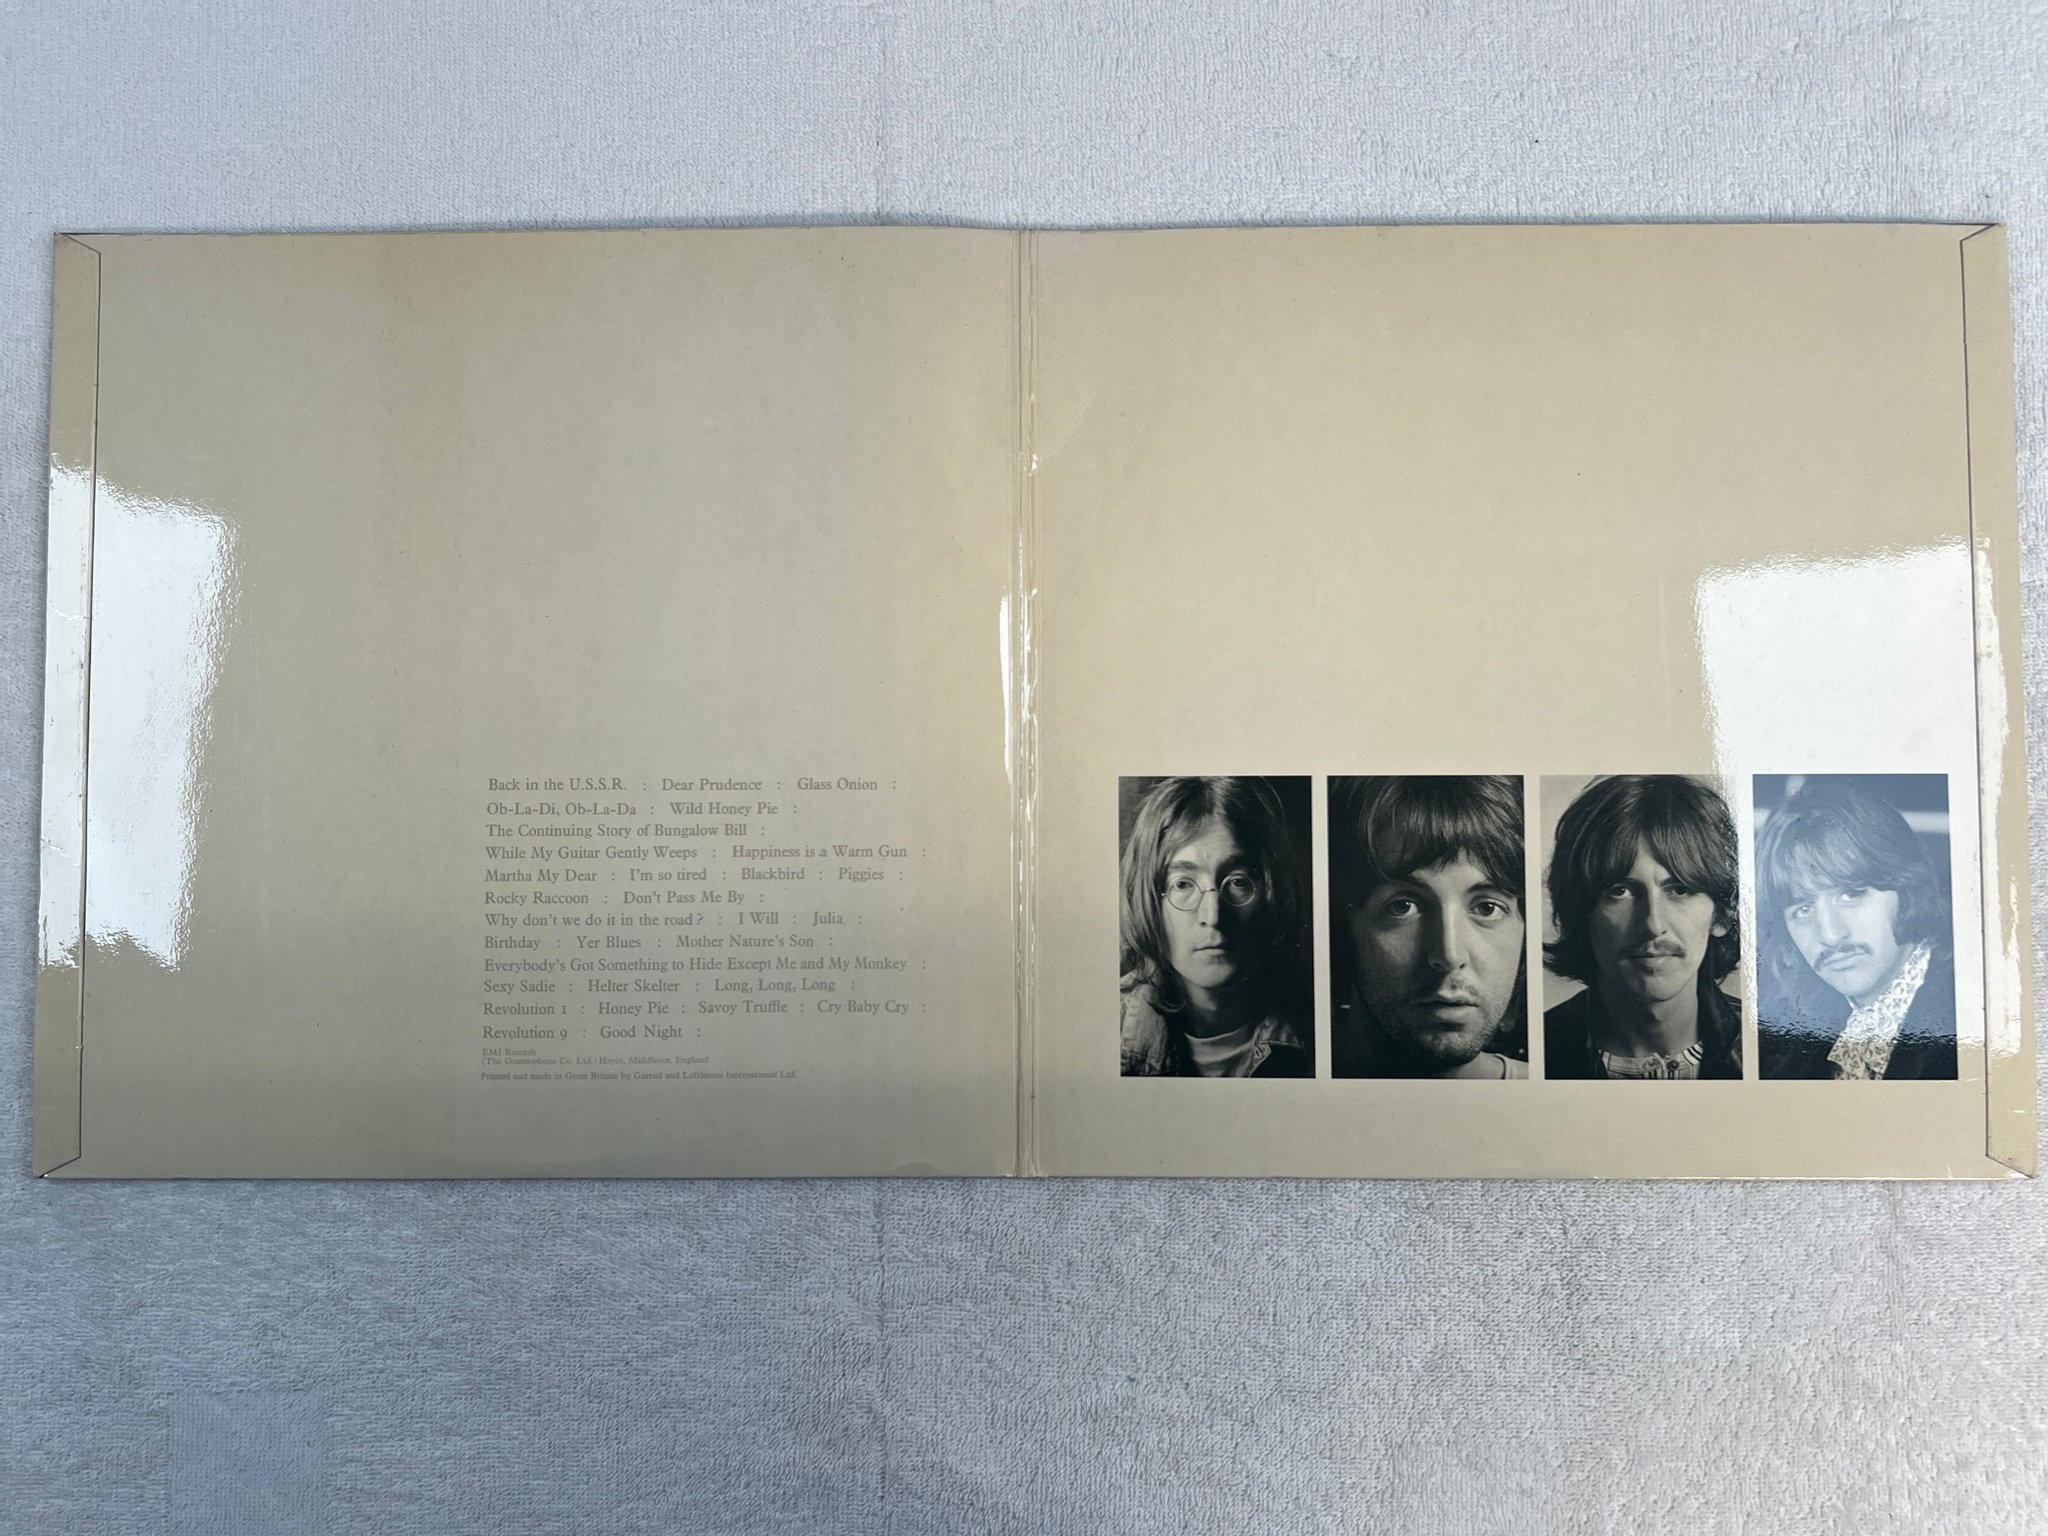 Omslagsbild för skivan THE BEATLES white album 2xLP -68 UK APPLE PCS 7067 + poster & 4 pictures 